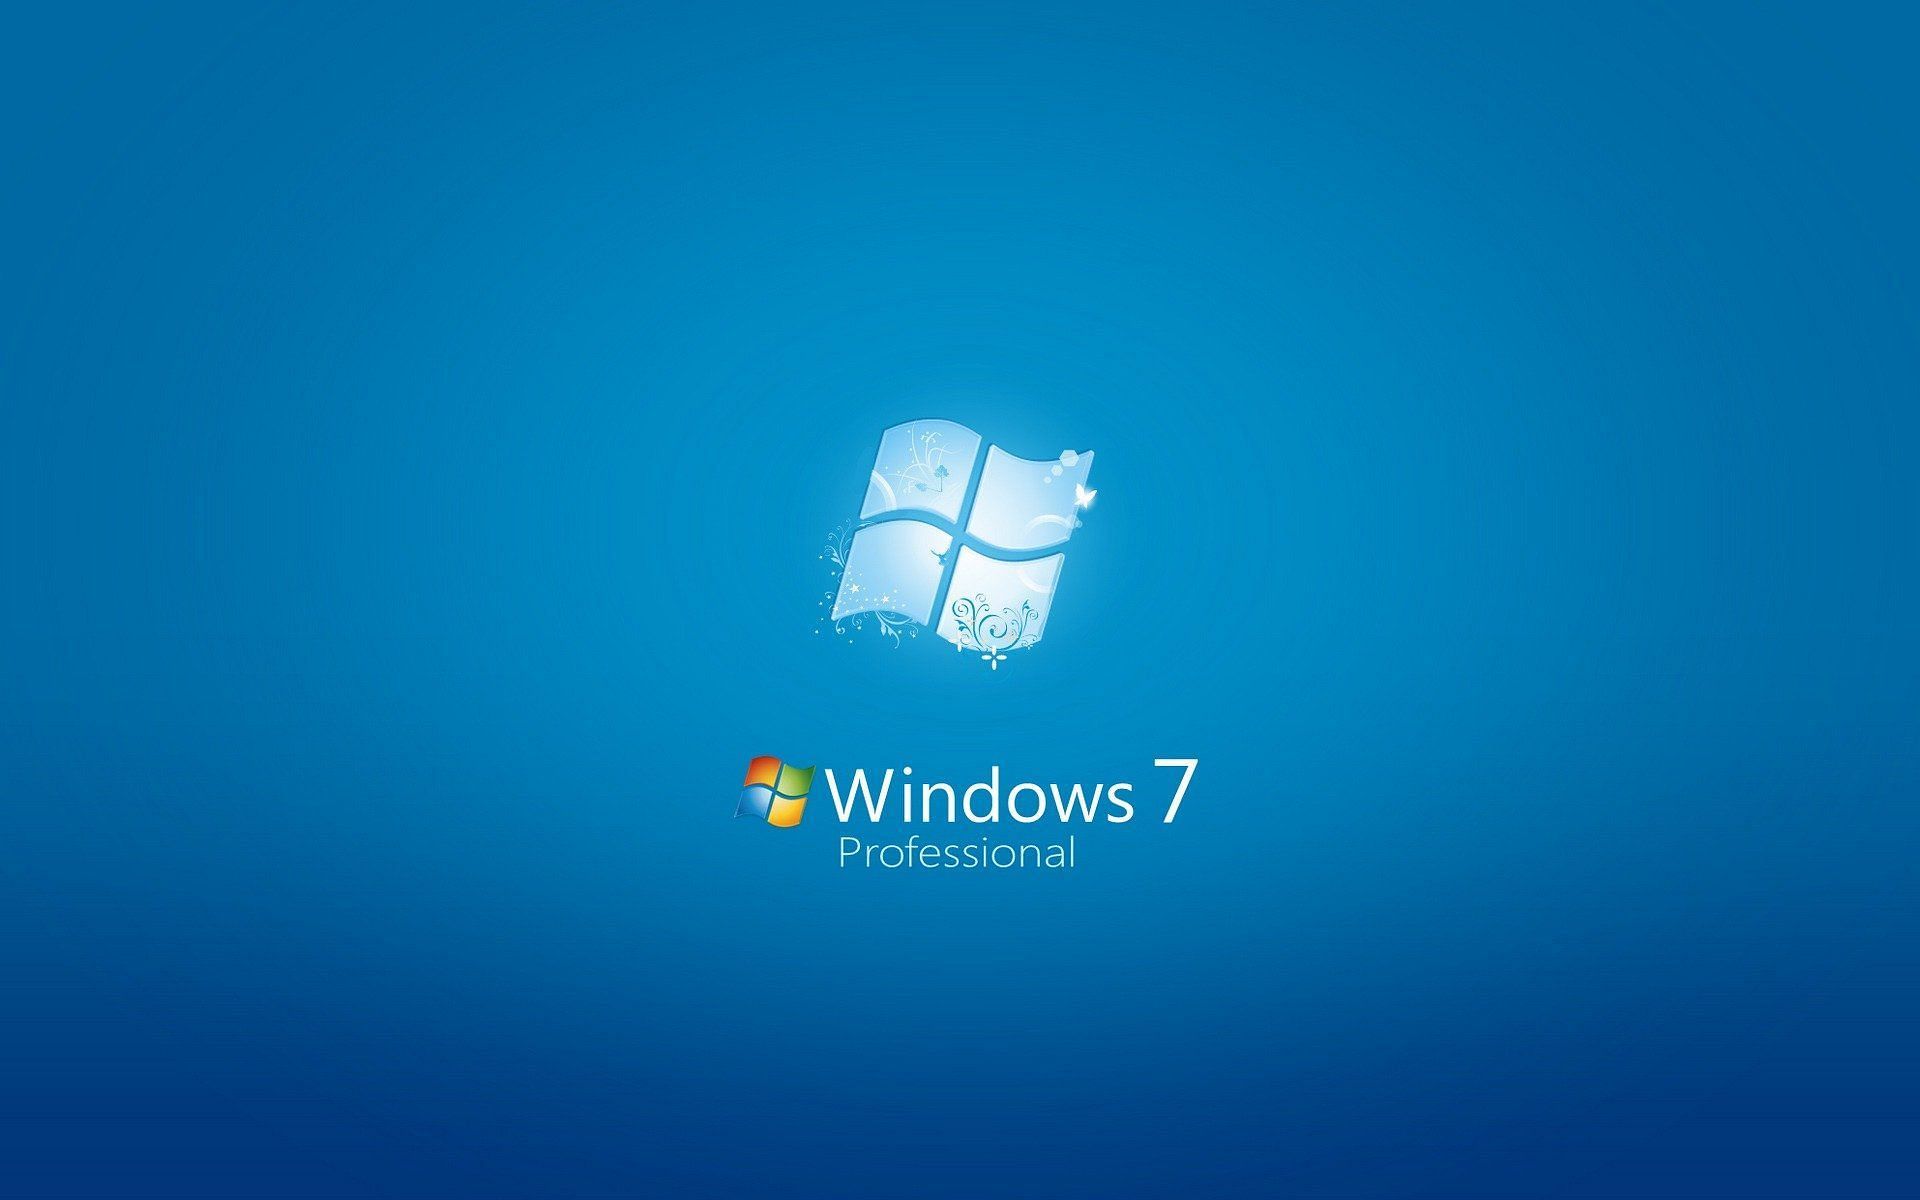 Windows 7 professional (Image via Wallpaper Access)